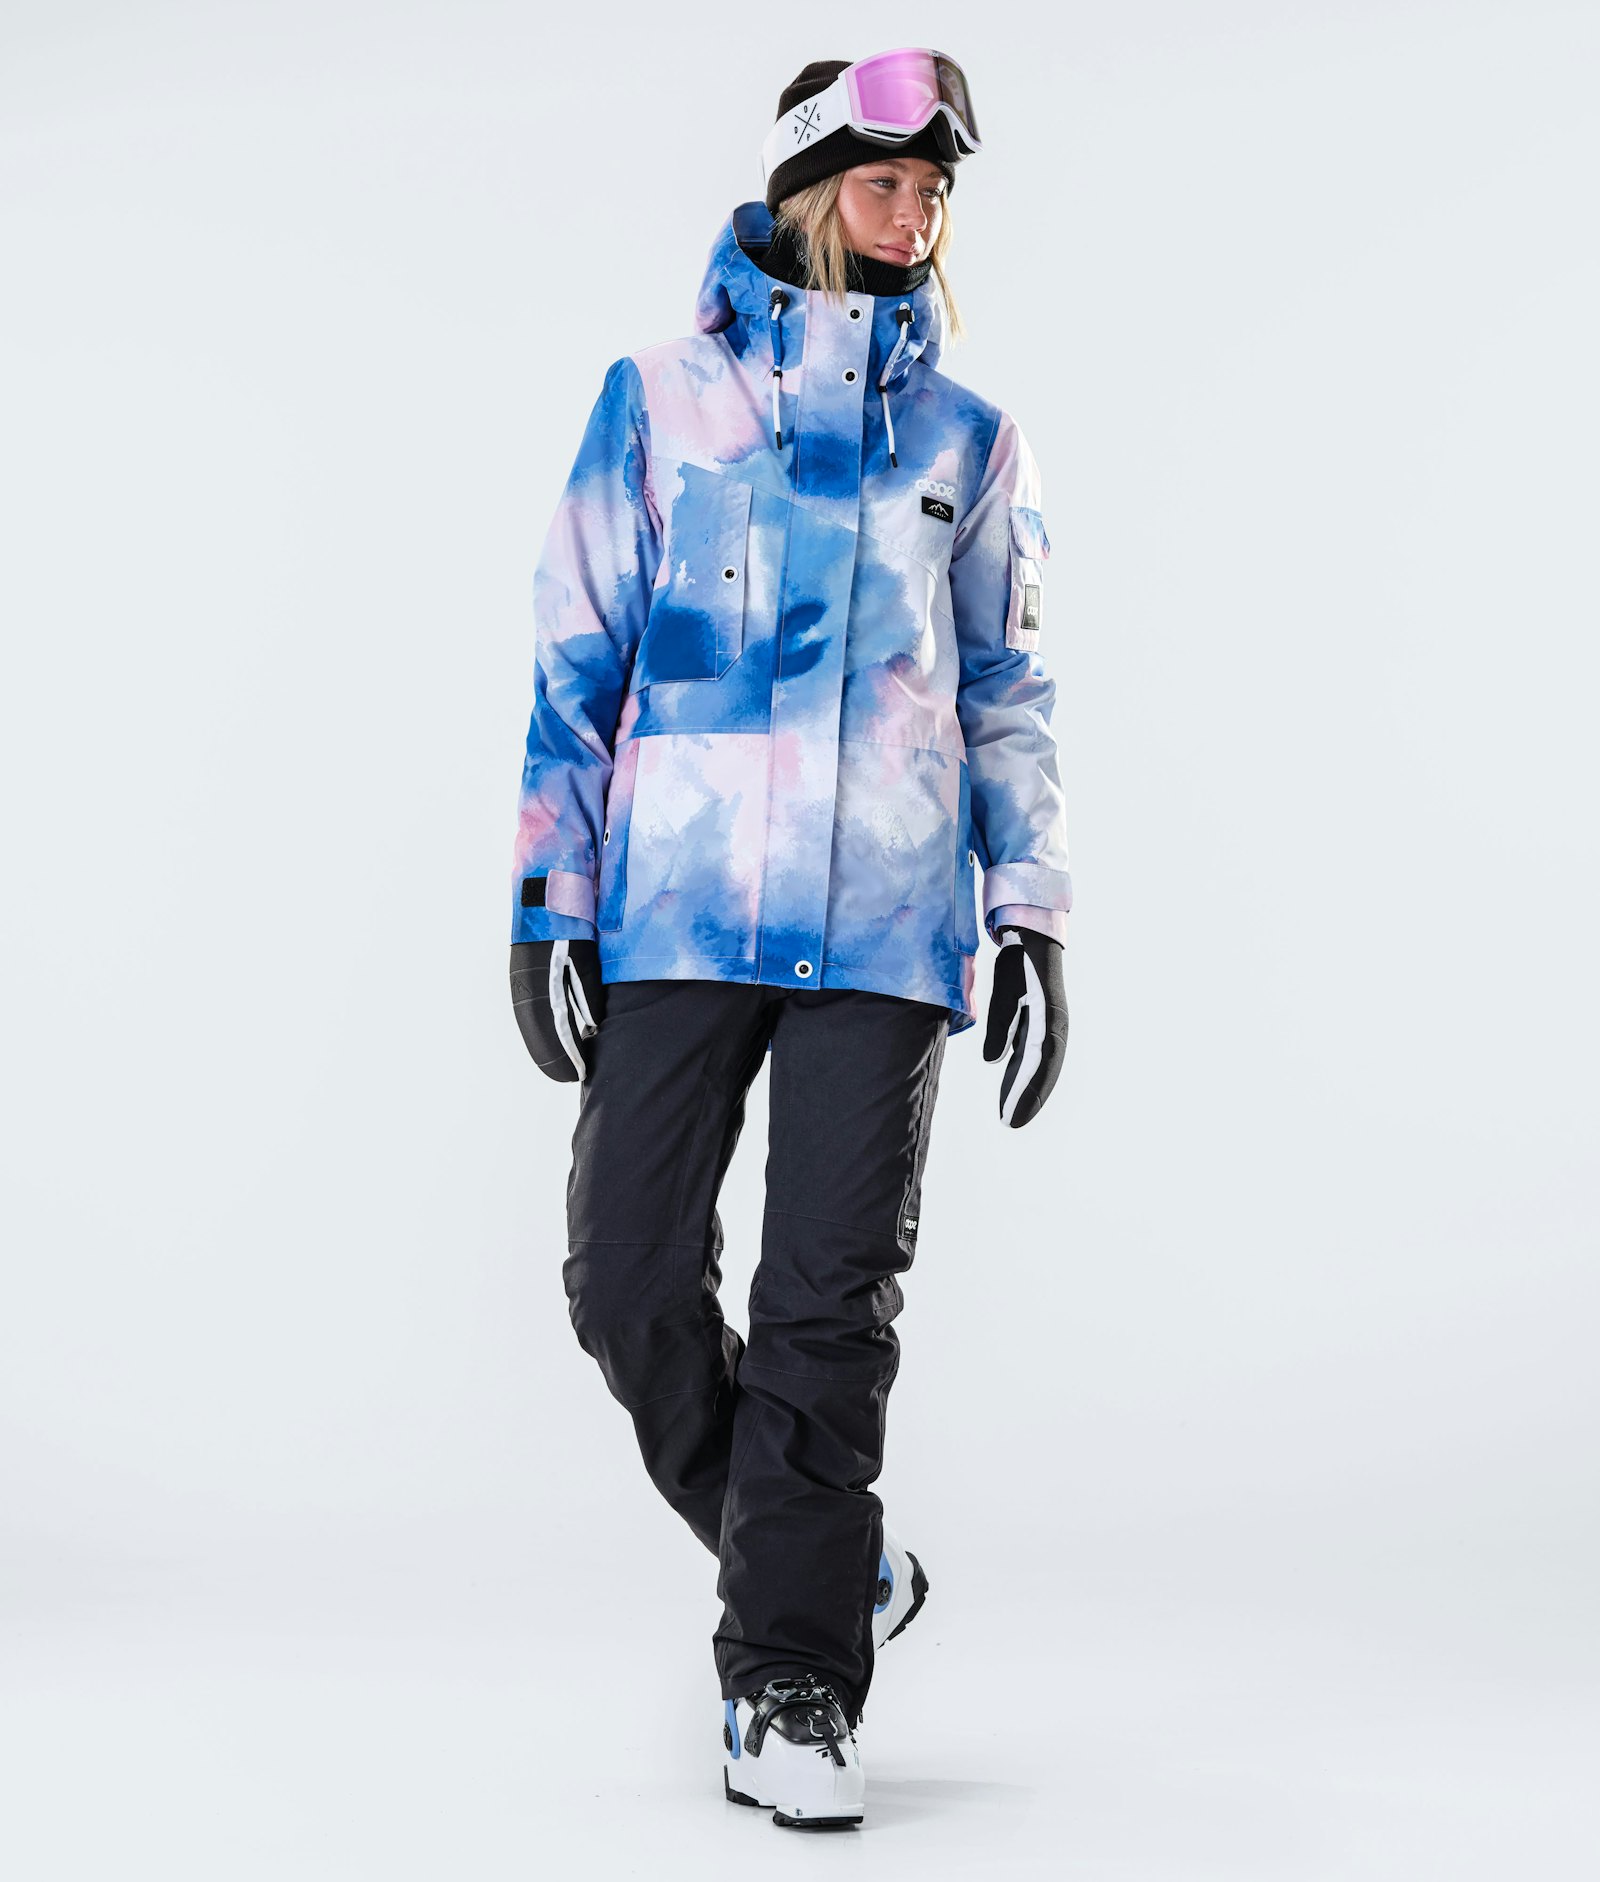 Adept W 2020 Ski Jacket Women Cloud